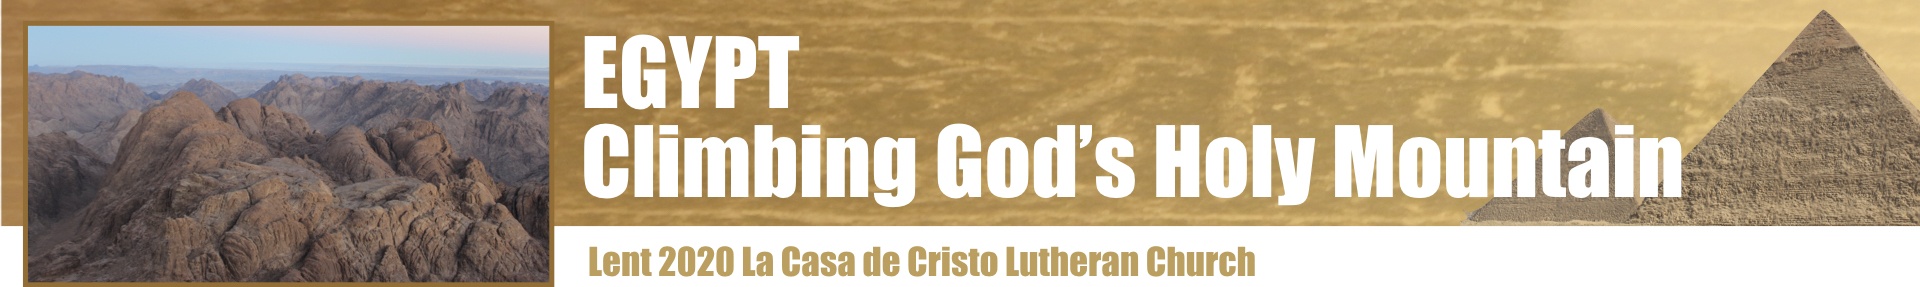 Egypt Lent 2020 at La Casa de Cristo Scottsdale, Arizona Lutheran Church